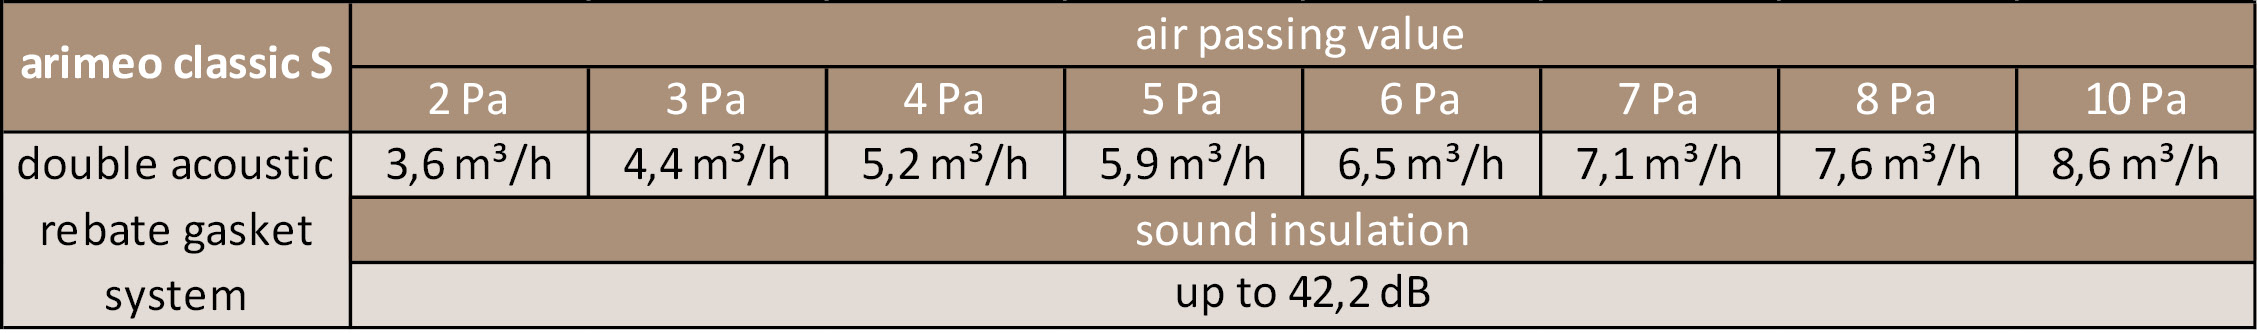 arimeo classic S performance data double acoustic